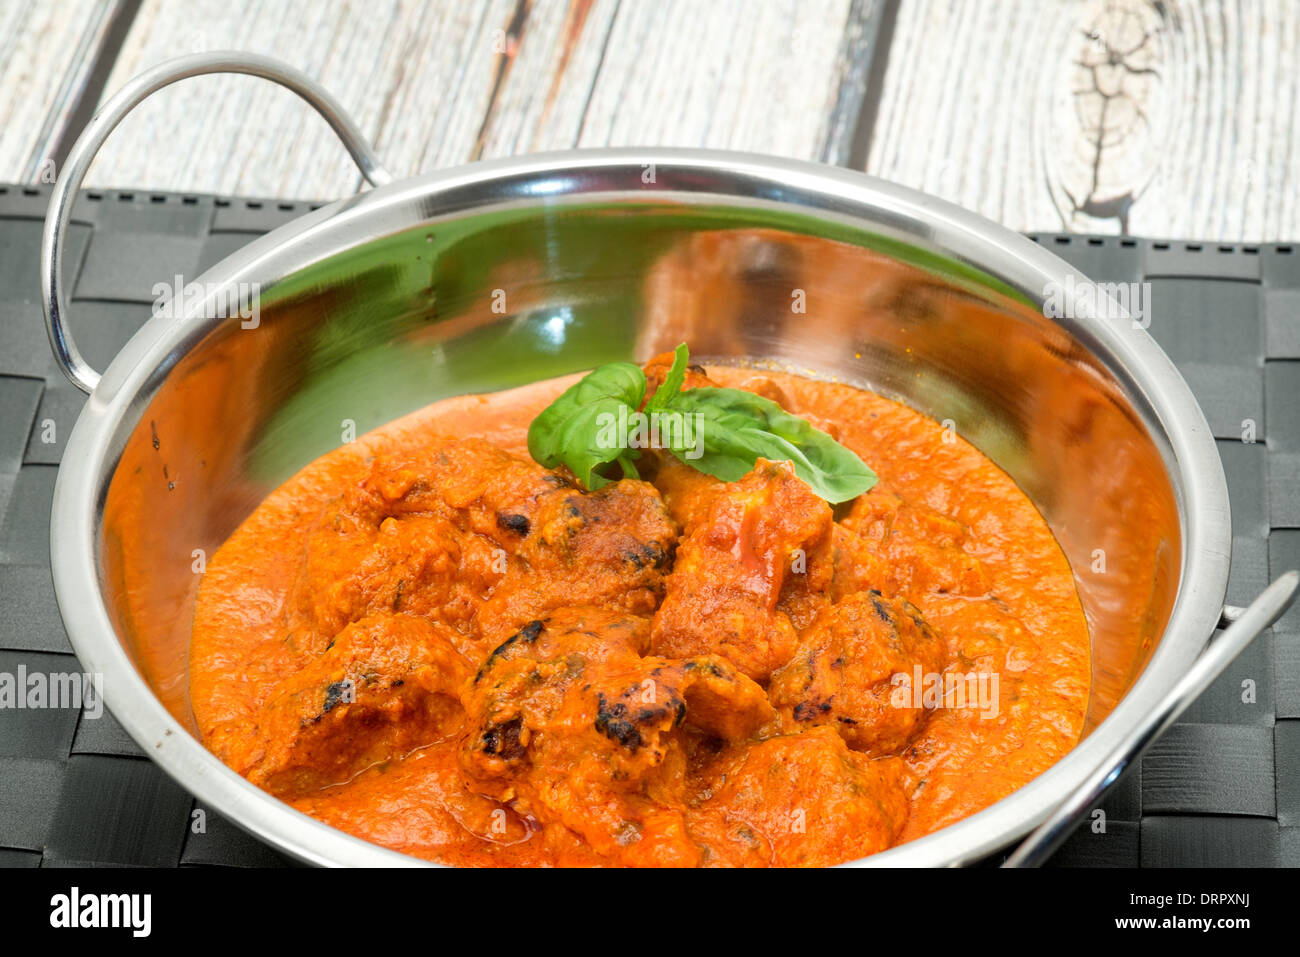 A Balti dish containing Chicken Tikka Masala curry Stock Photo